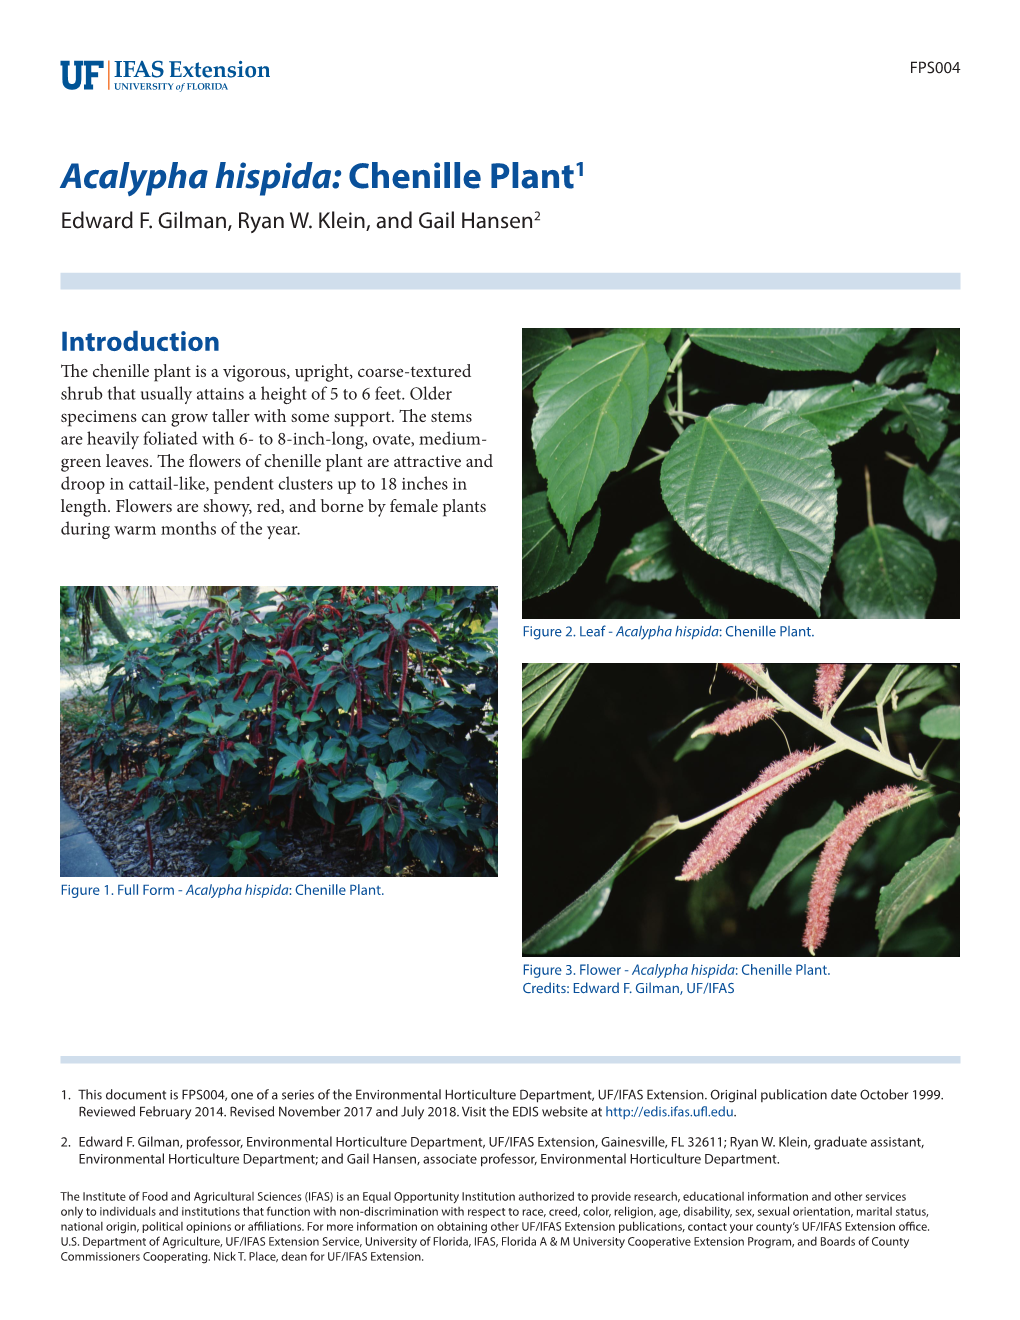 Acalypha Hispida: Chenille Plant1 Edward F